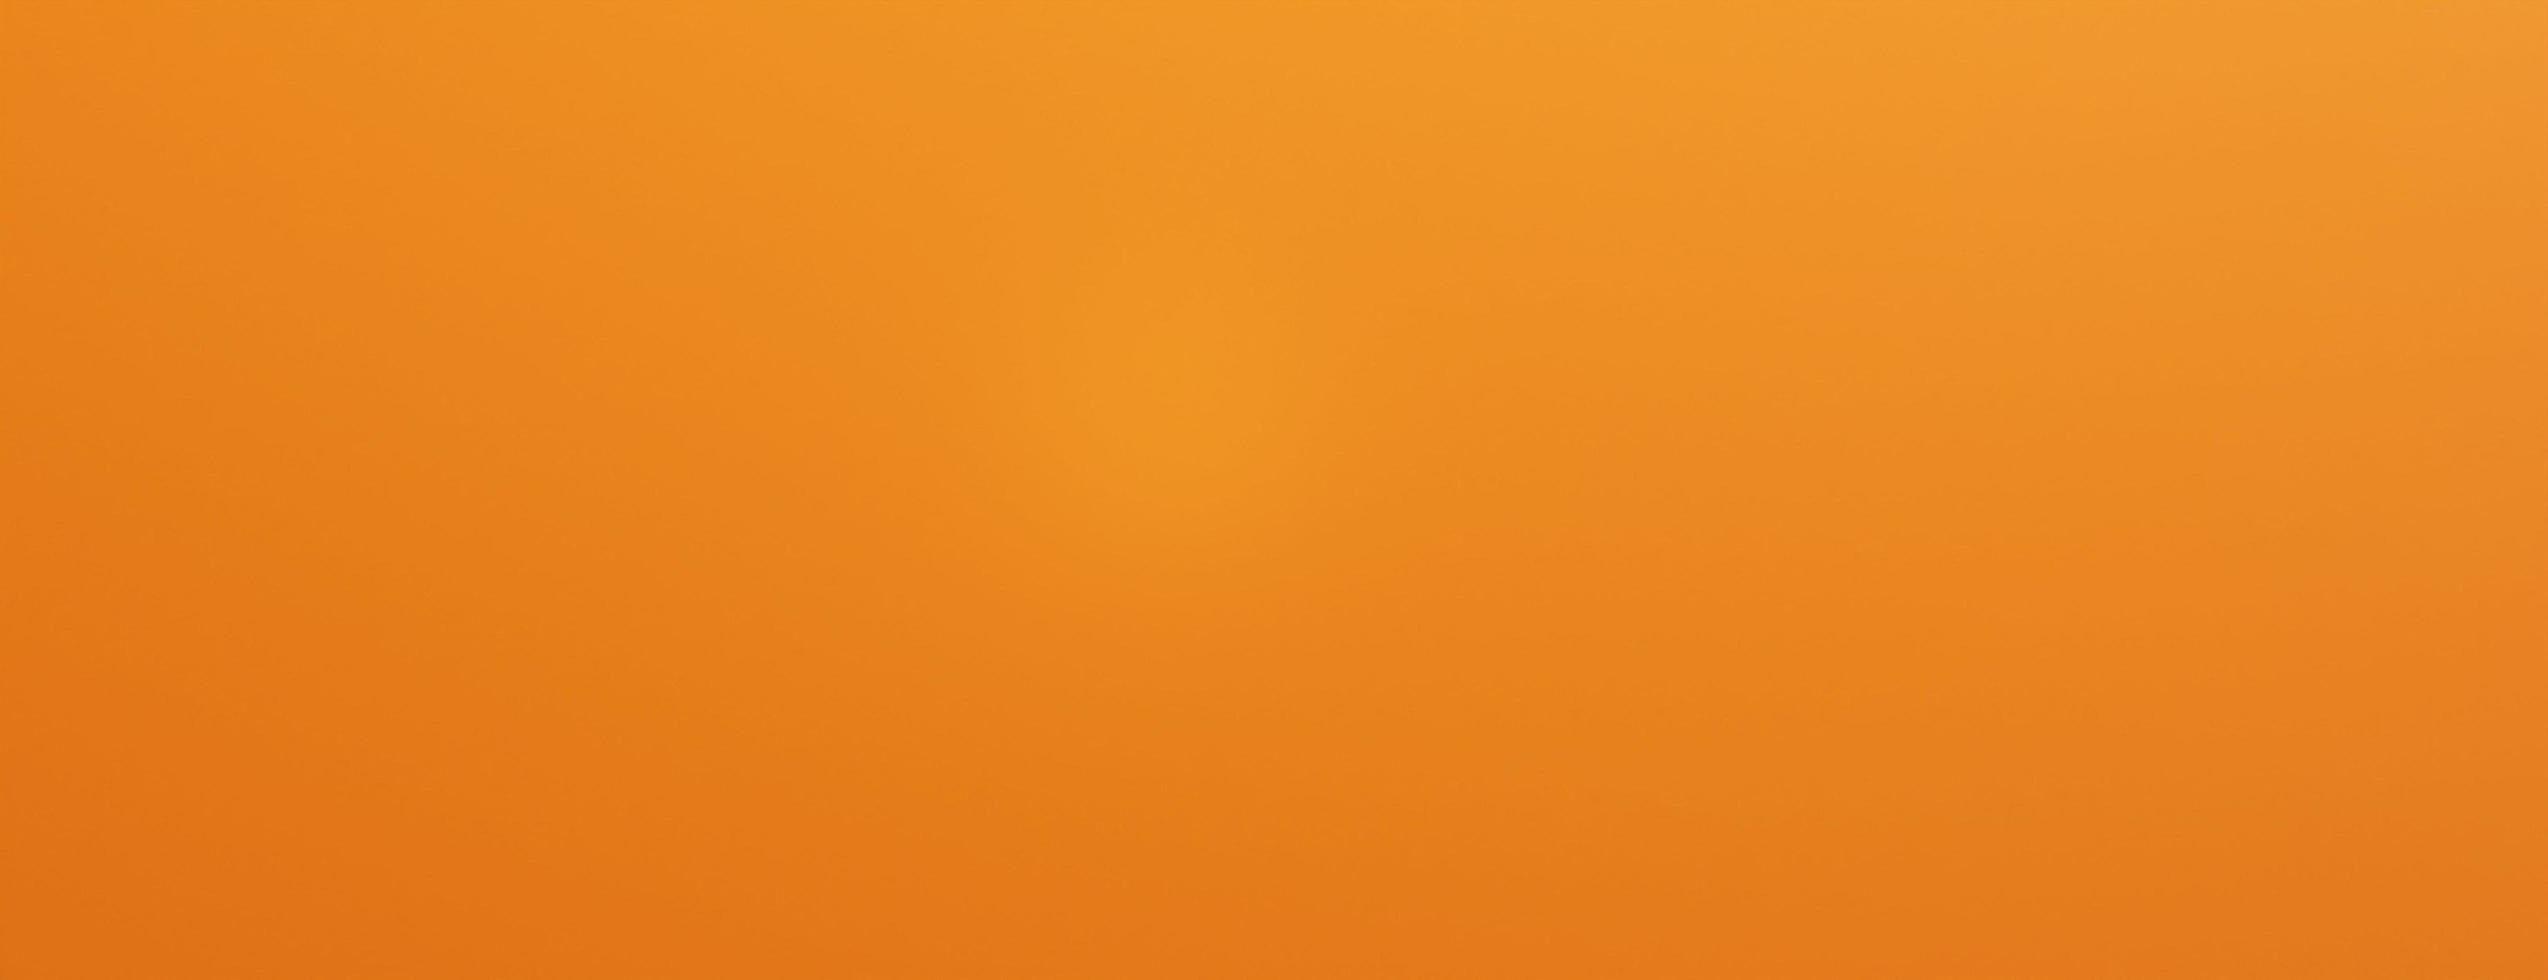 Orange gradient background.Golden background.Empty space for text.3D rendering,illustration photo